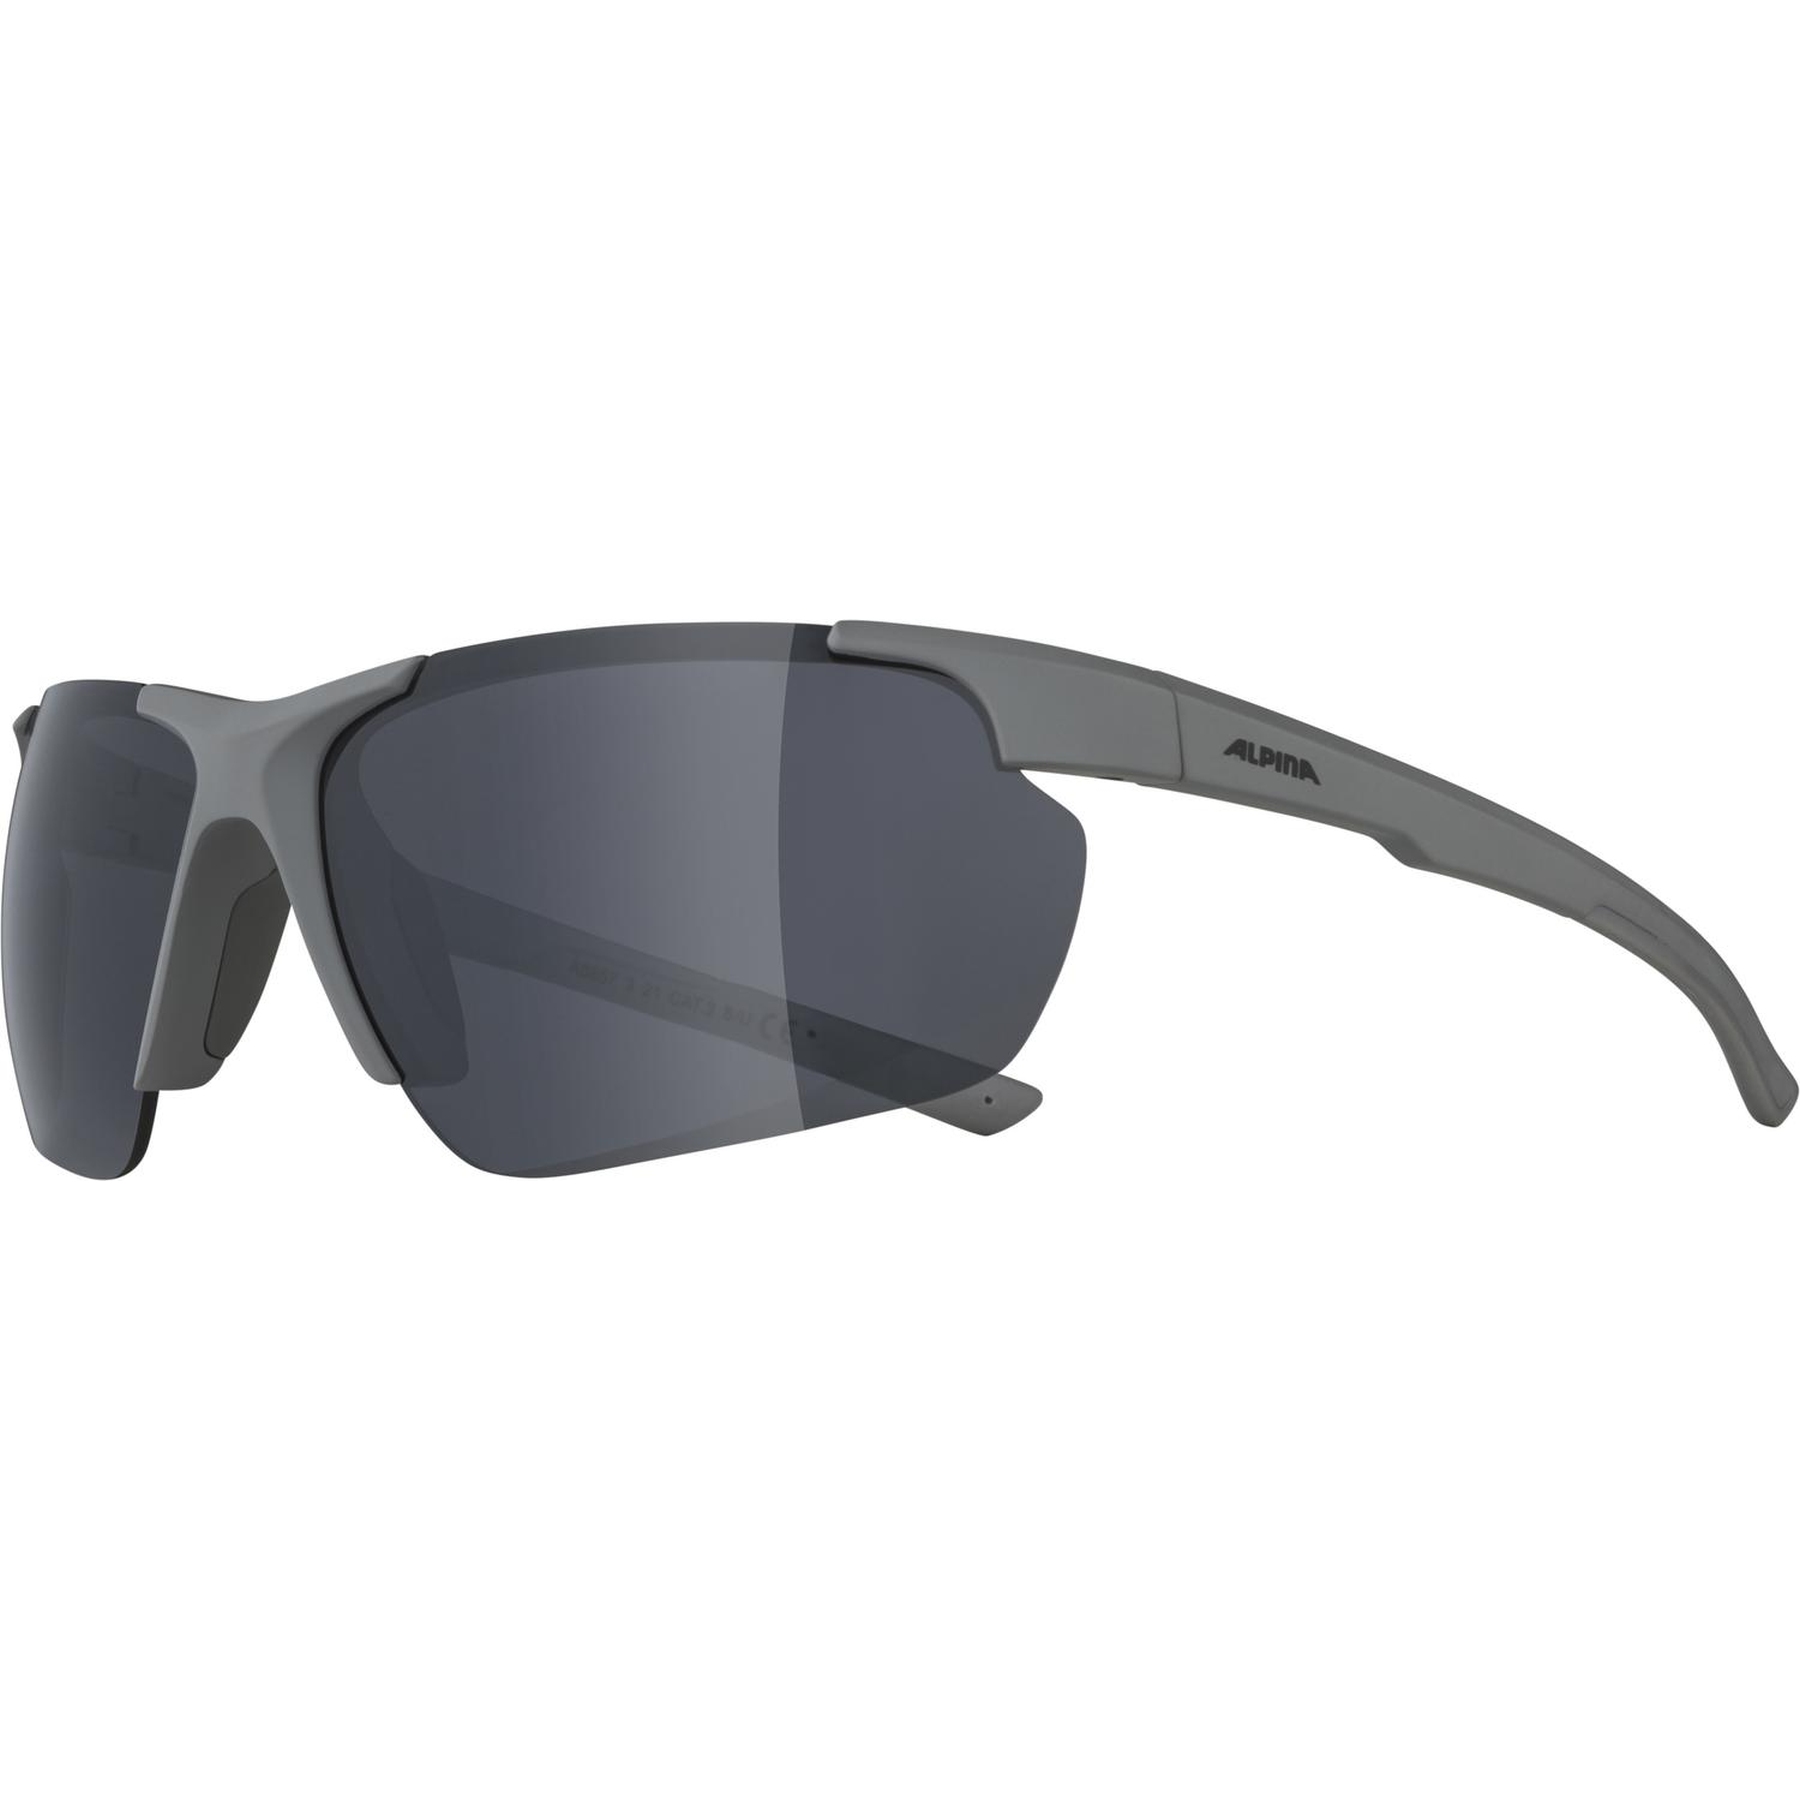 Productfoto van Alpina Defey HR Glasses - moon-grey matt/Ceramic Black Mirror